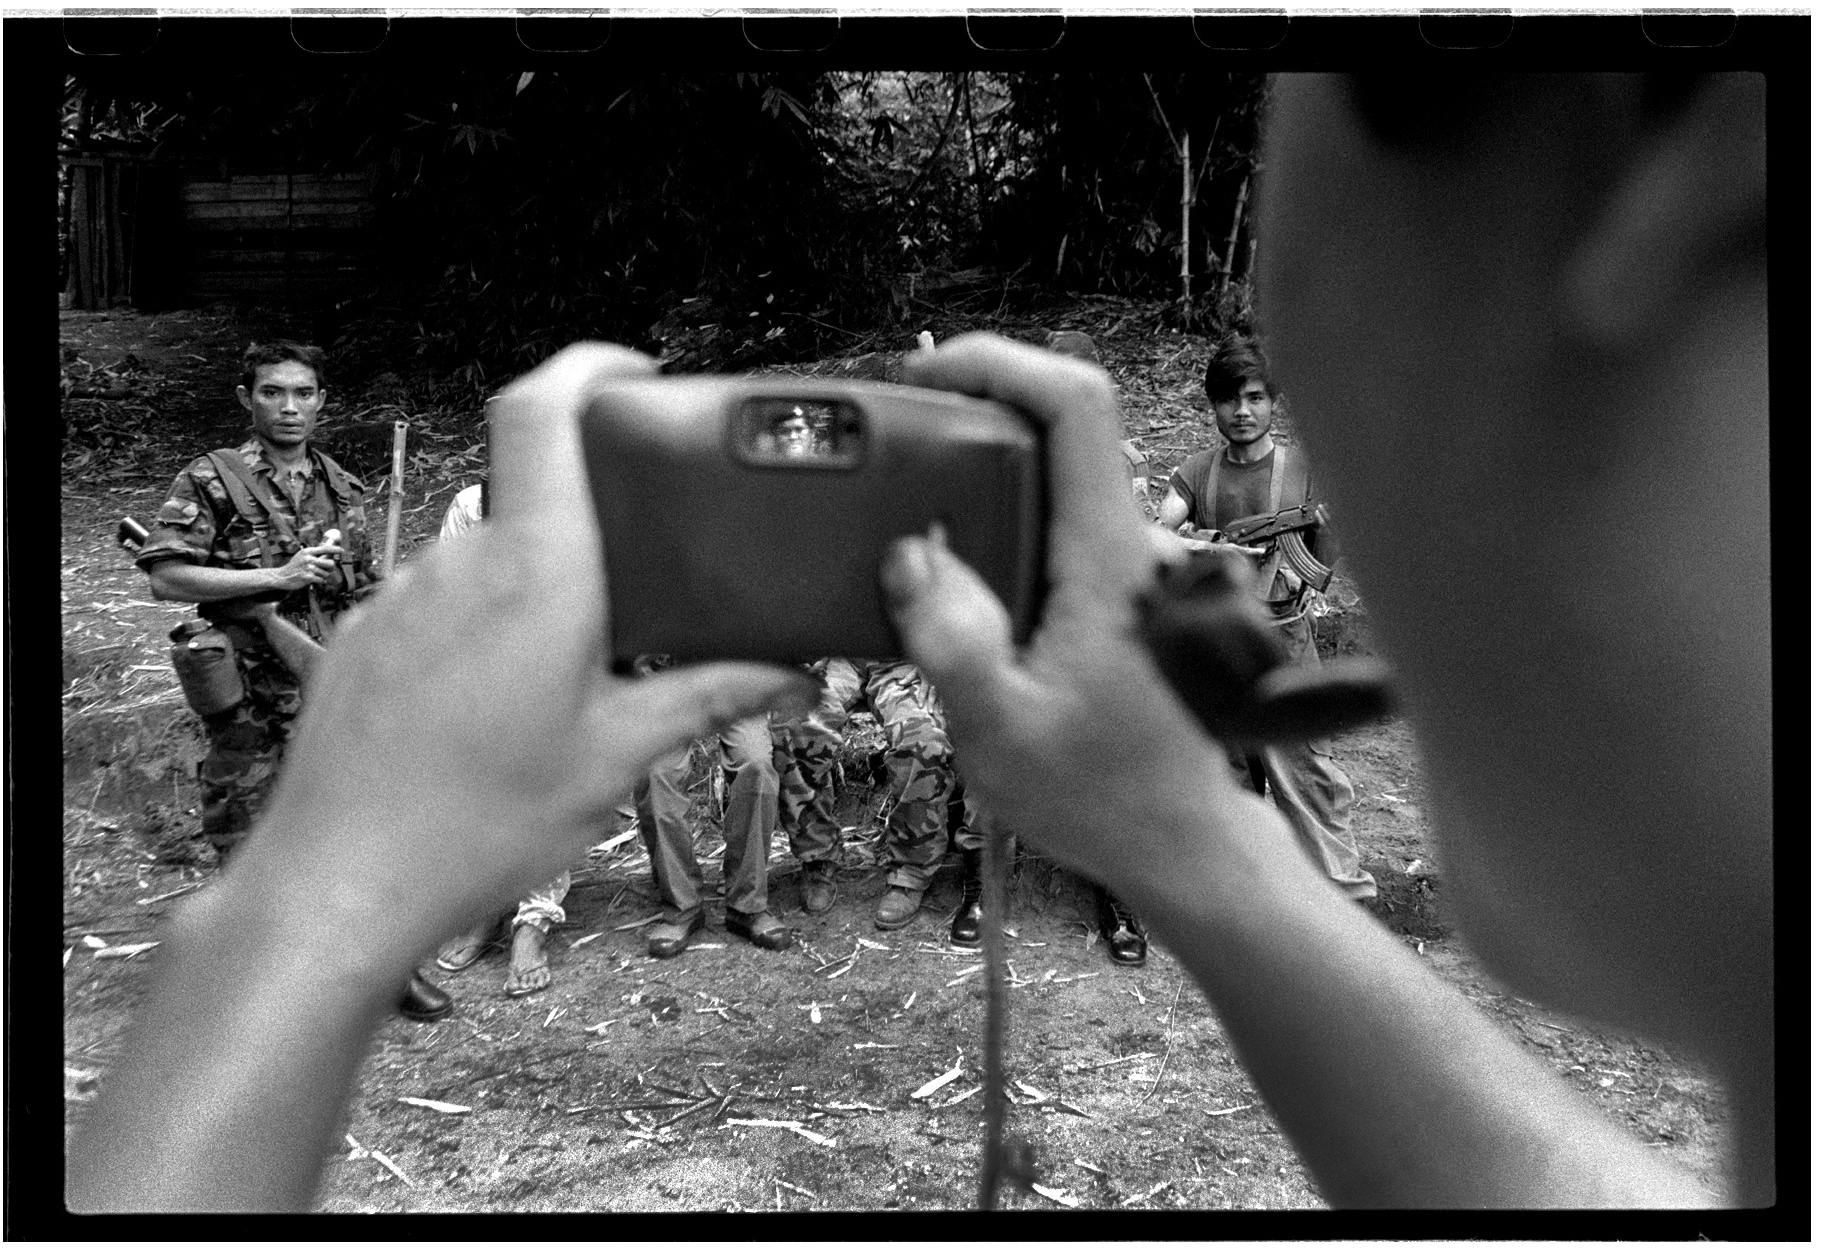  KNLA combatants do a group portrait before going on patrol in the jungle.&nbsp;Thai-Burma border,&nbsp;2005. 